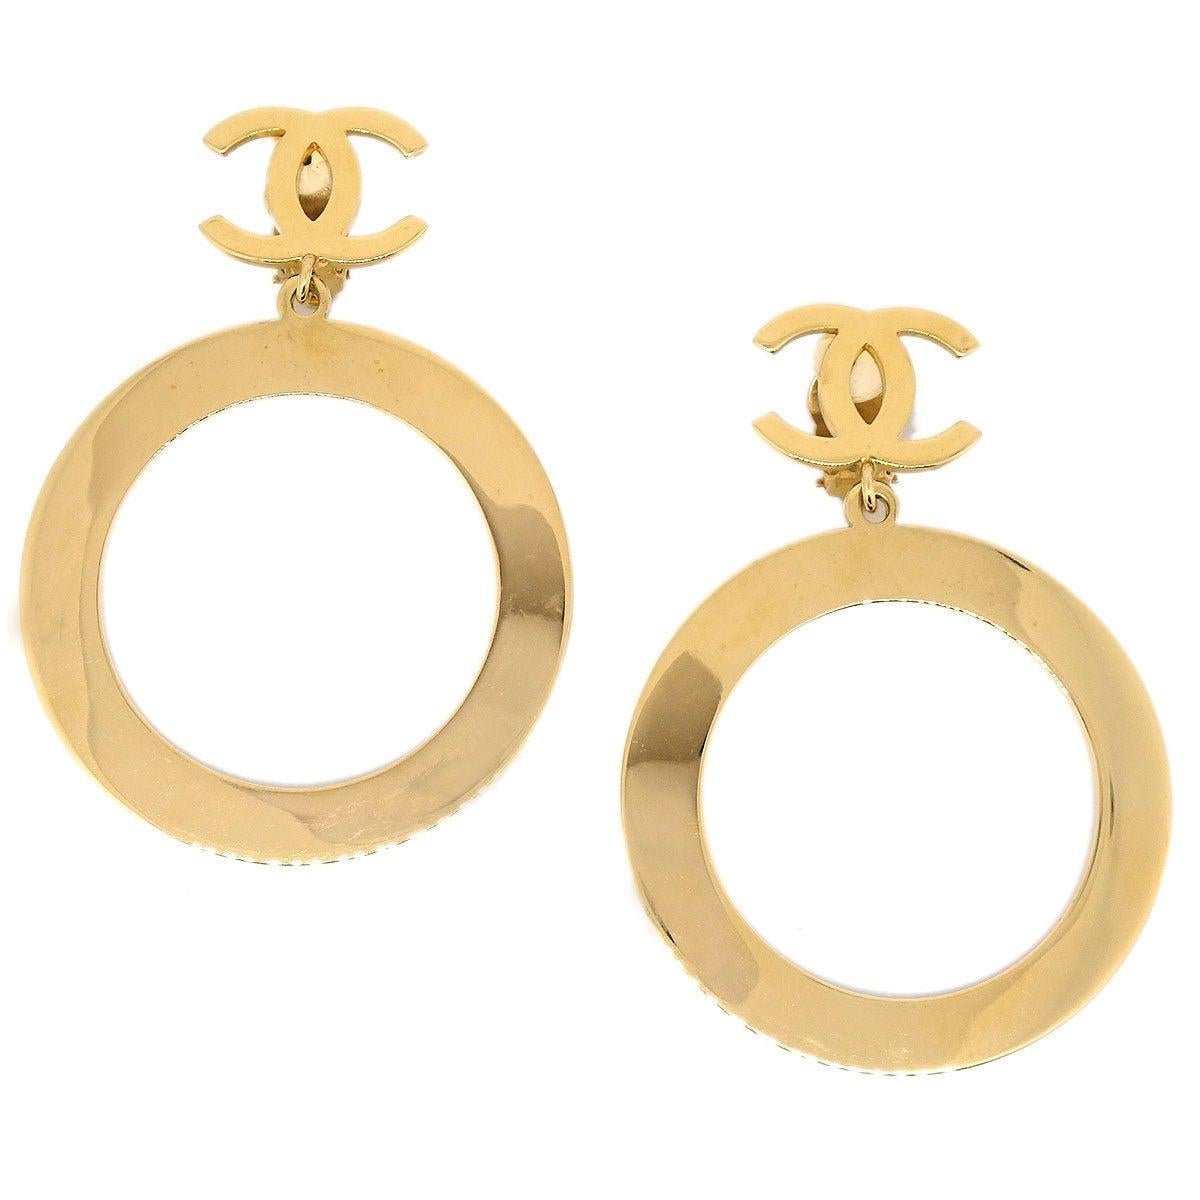 large gold chanel earrings